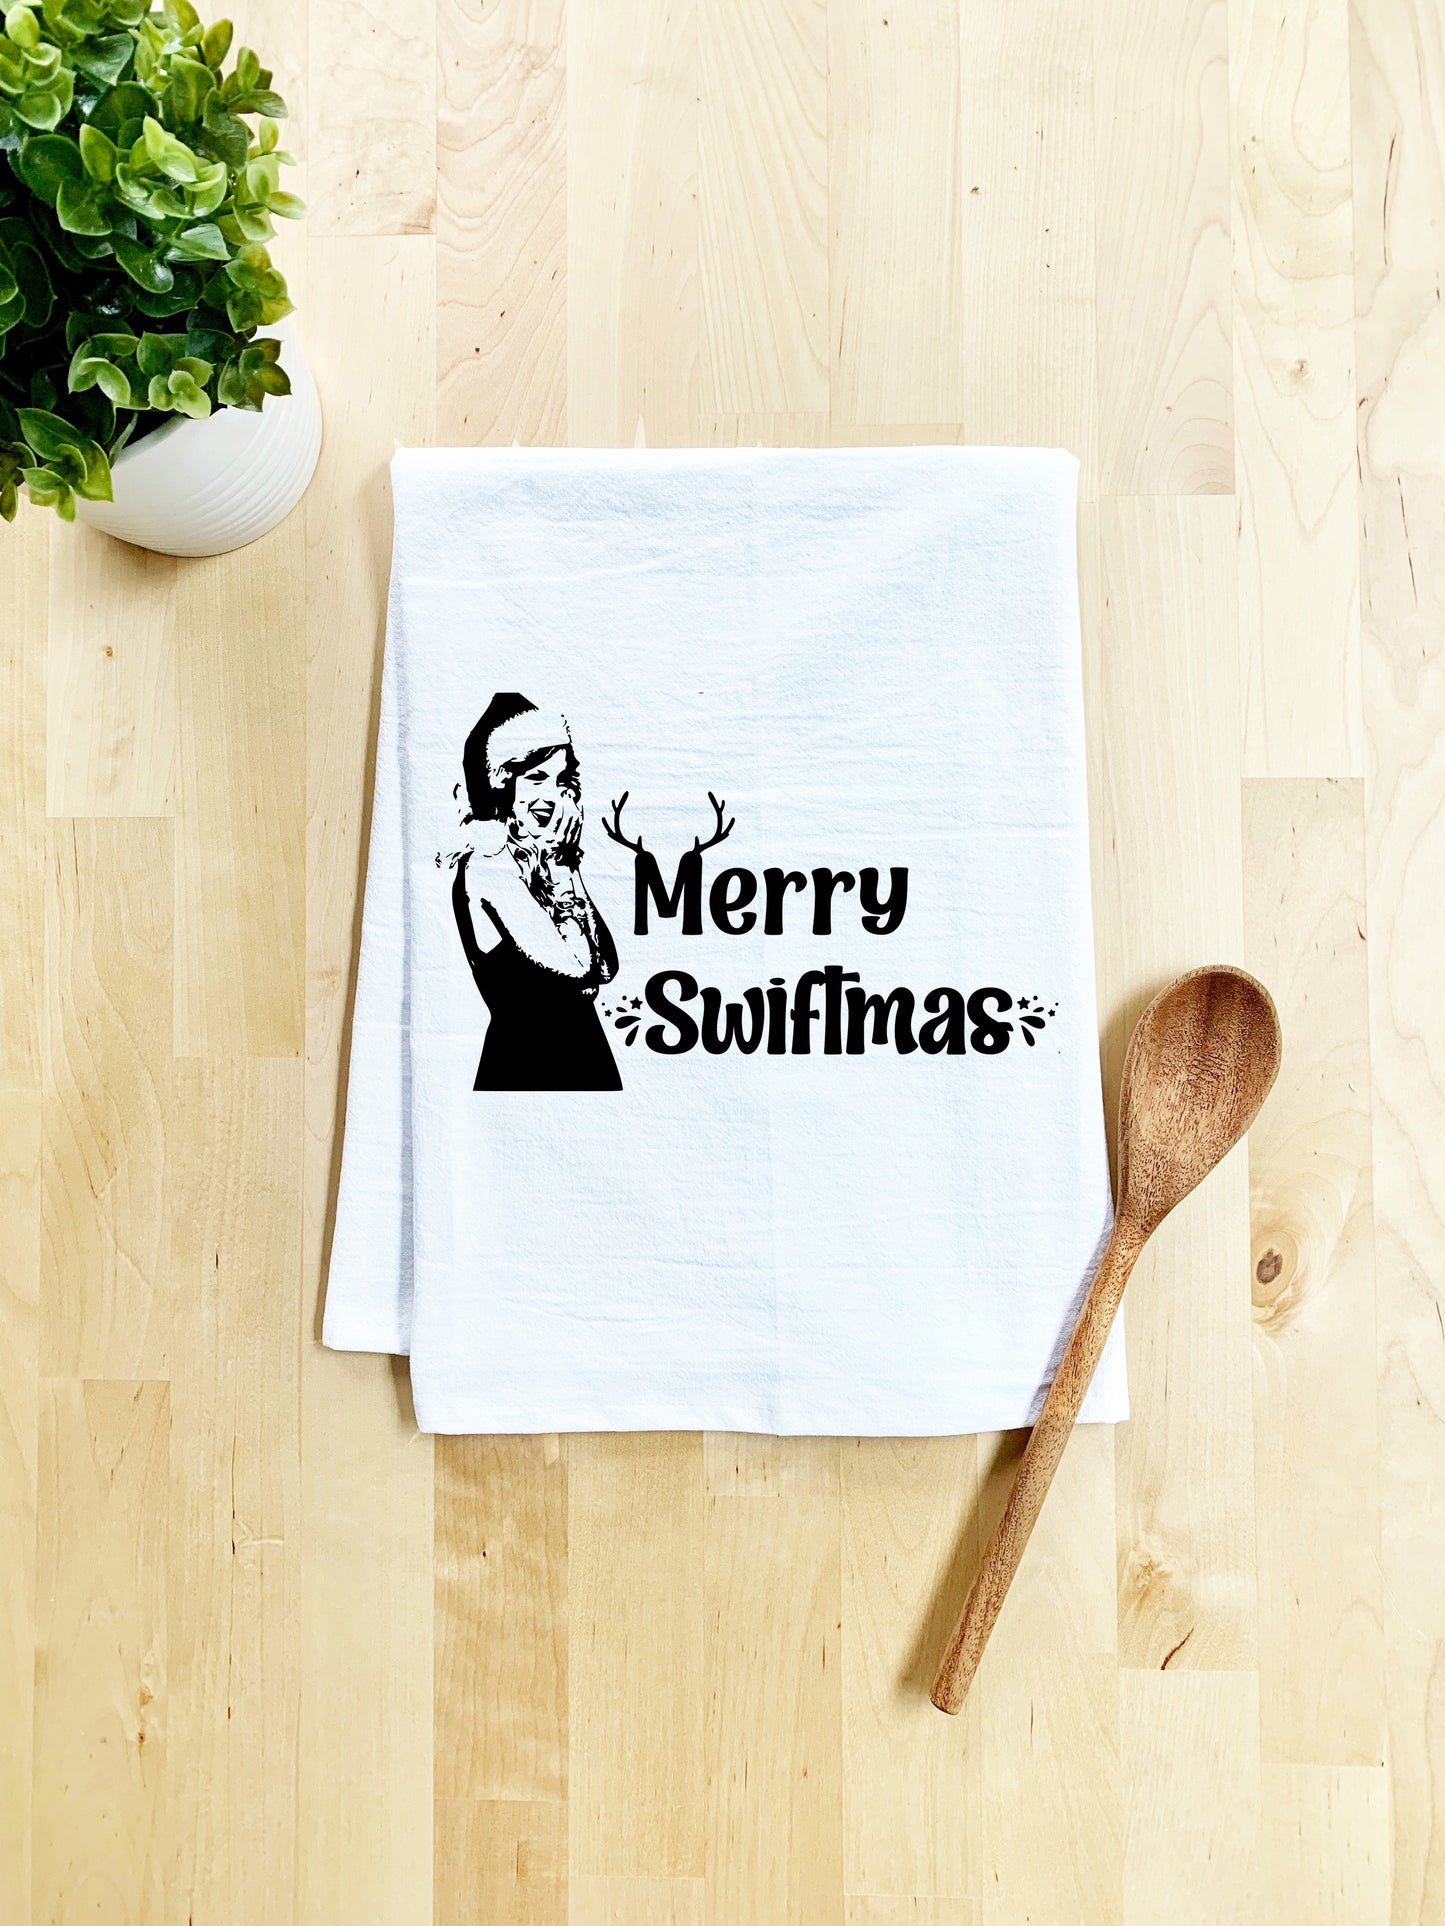 Merry Swiftmas Dish Towel - White Or Gray